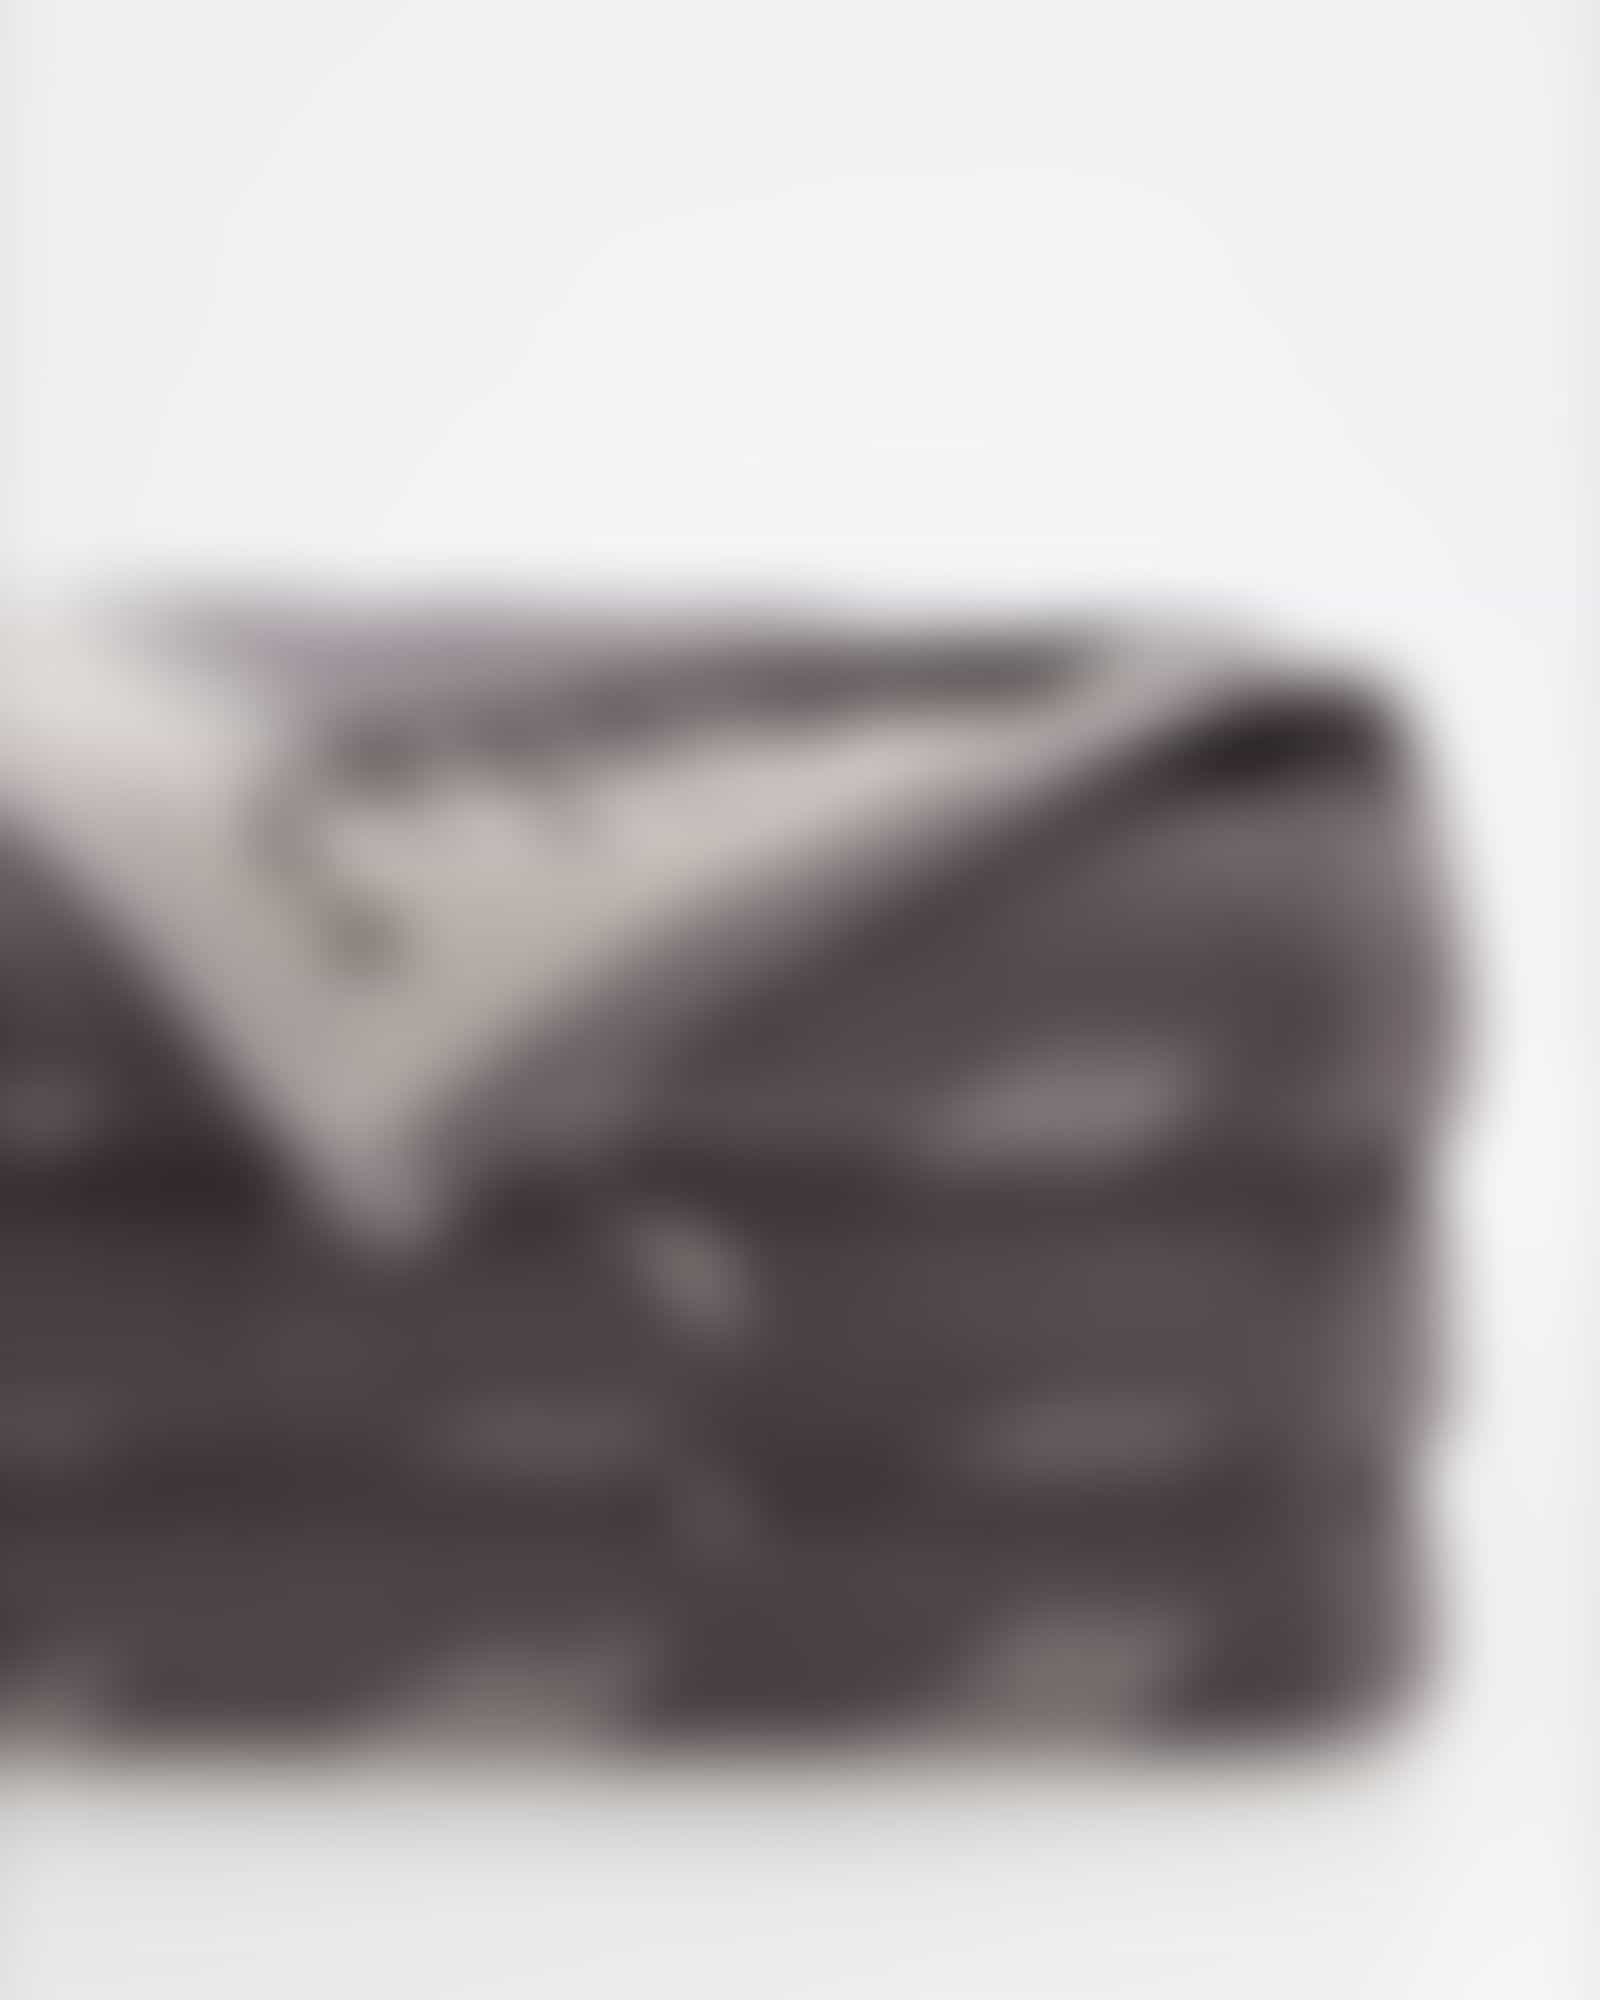 JOOP Move Faded Cornflower 1691 - Farbe: anthrazit - 77 - Handtuch 50x100 cm Detailbild 2